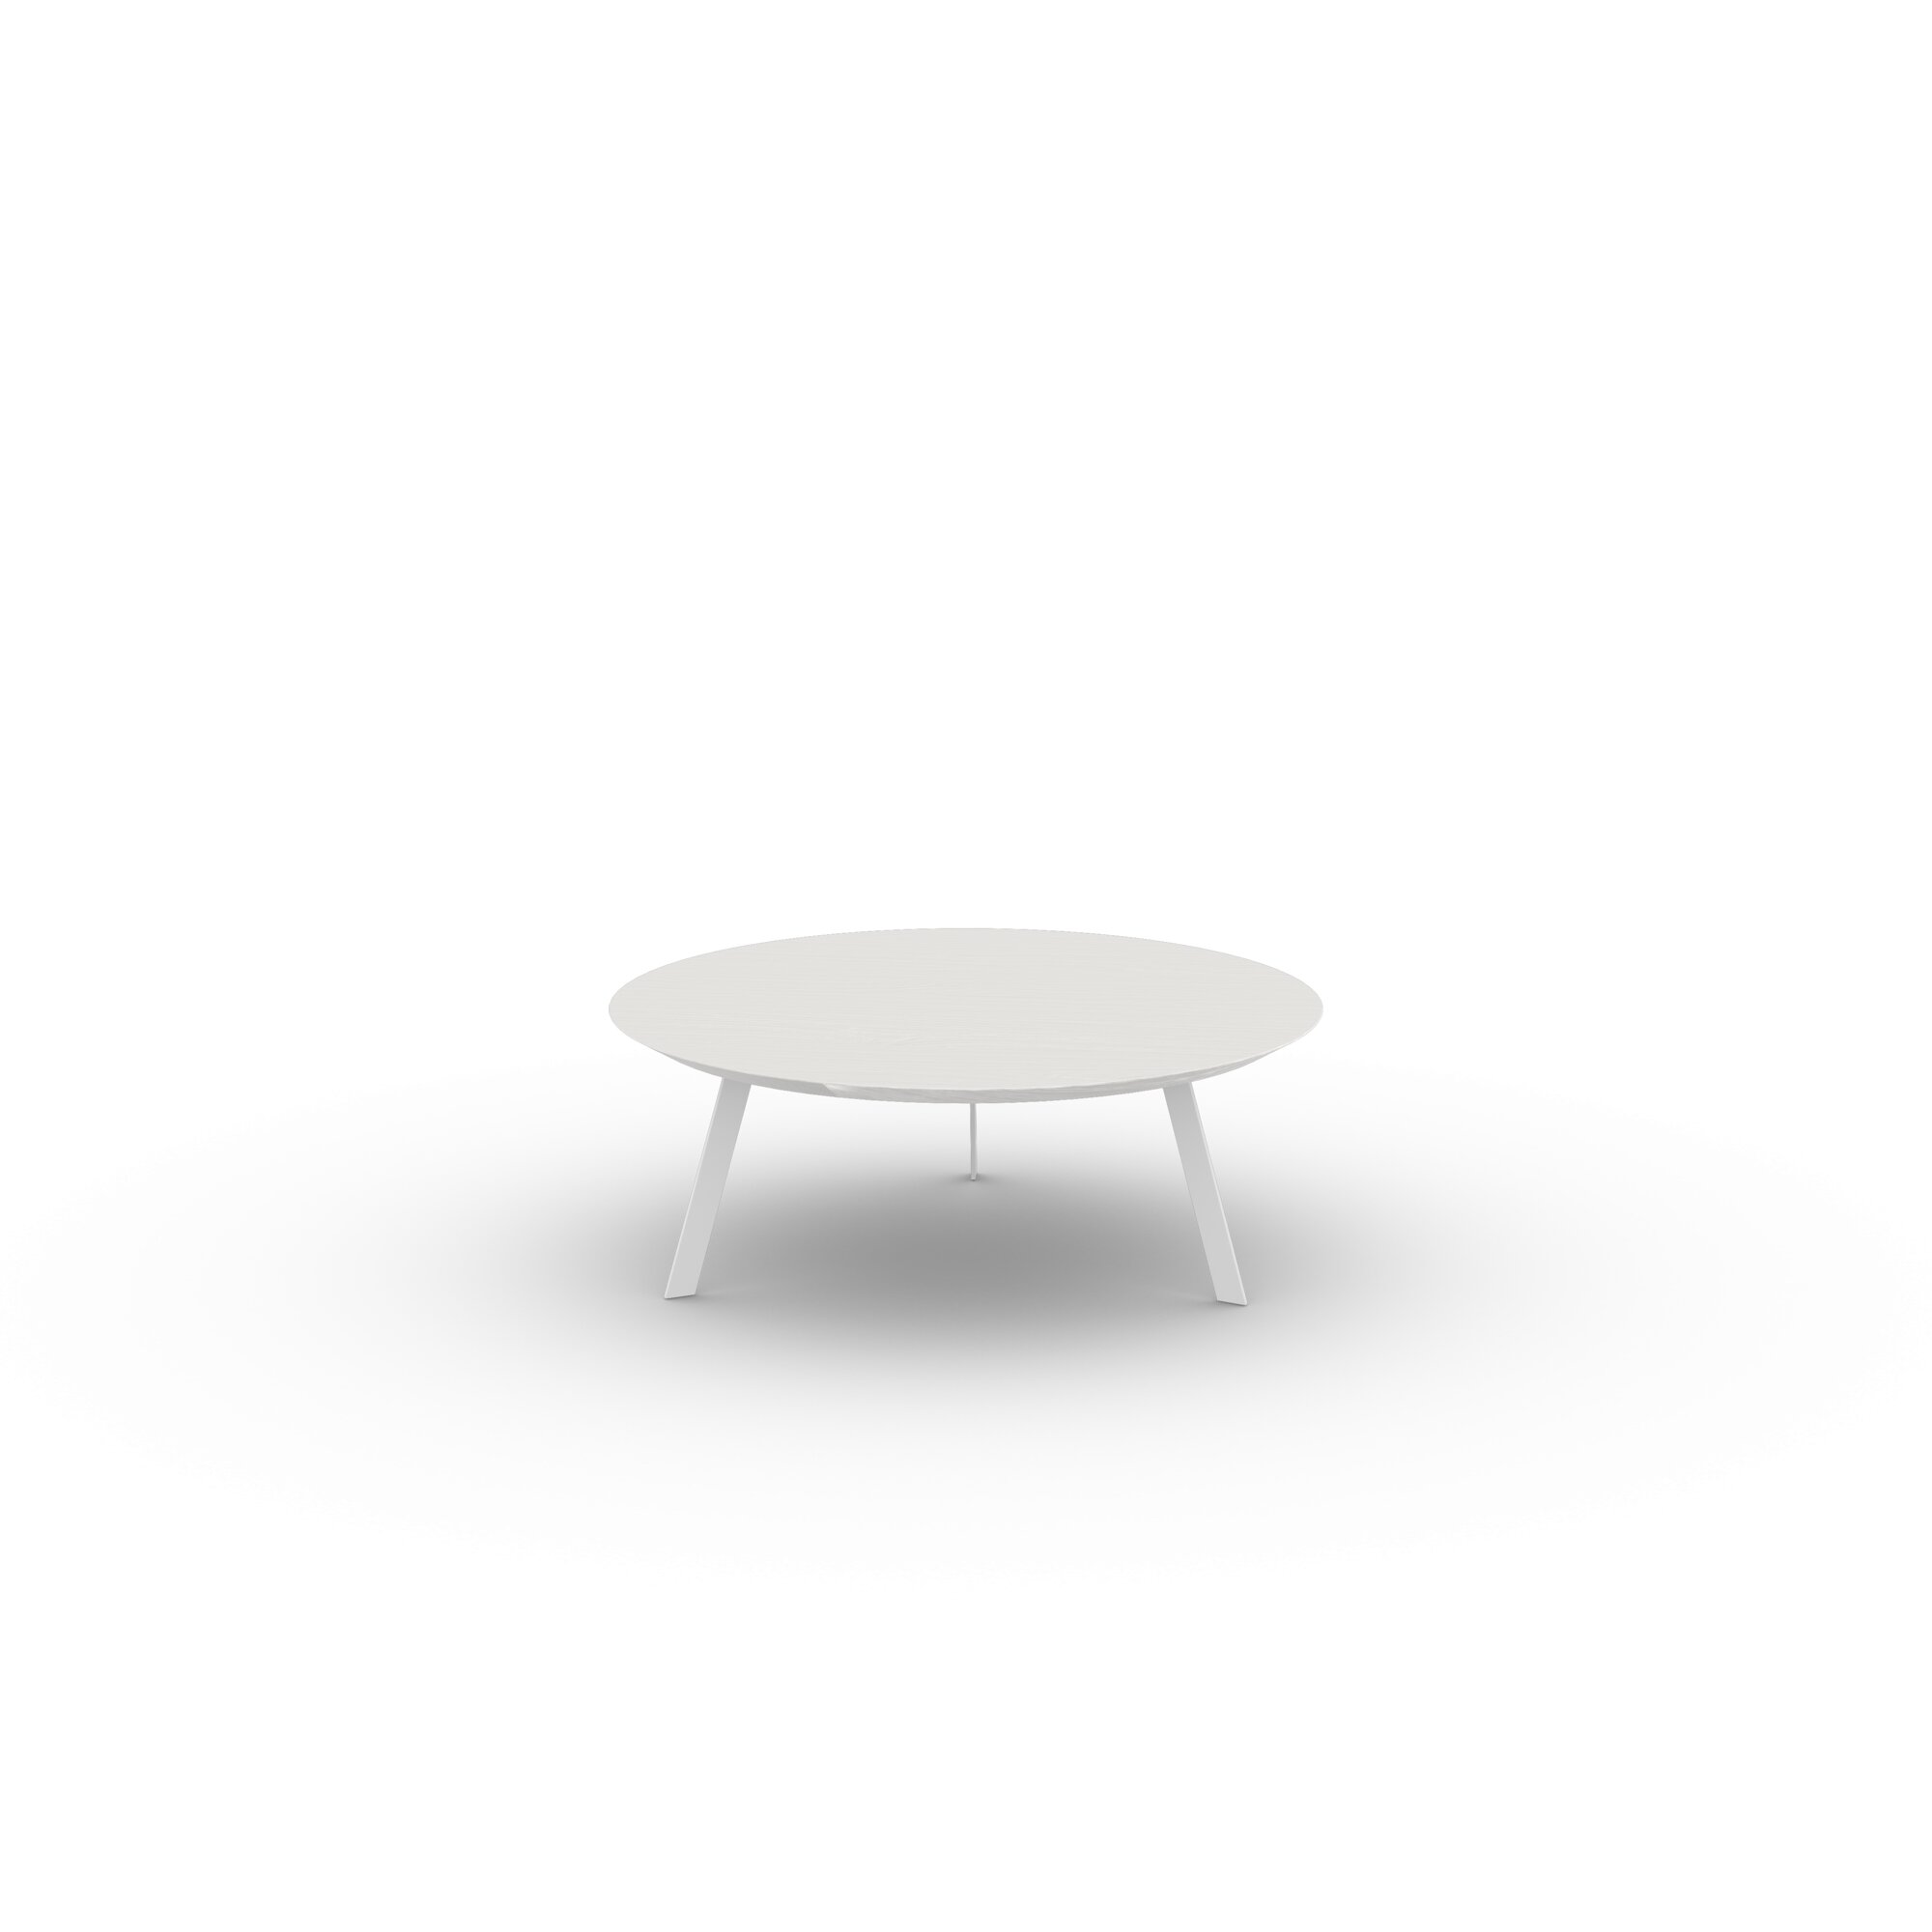 Design Coffee Table | New Co Coffee Table 90 Round White | Oak white lacquer | Studio HENK| 